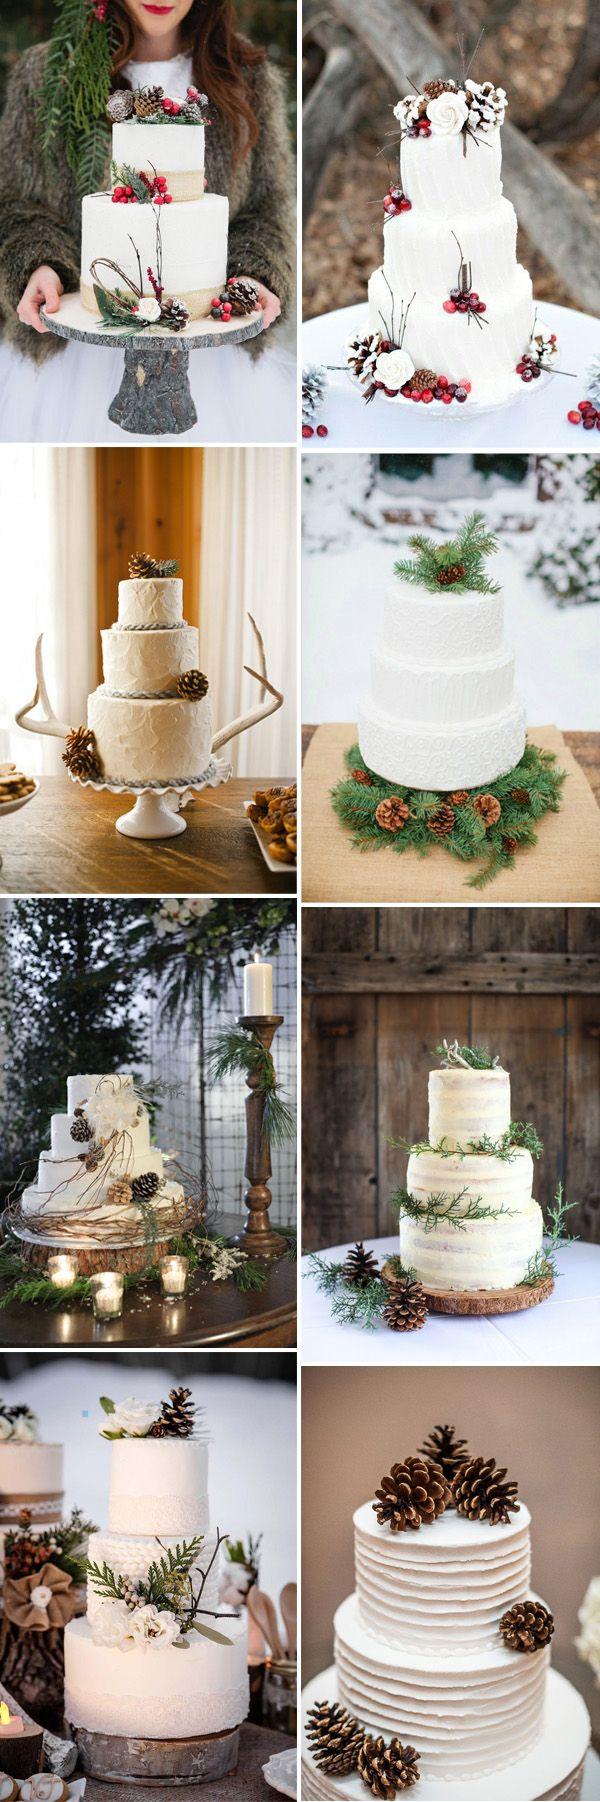 زفاف - 21 Beautiful Wedding Cakes With Winter Touches For 2015